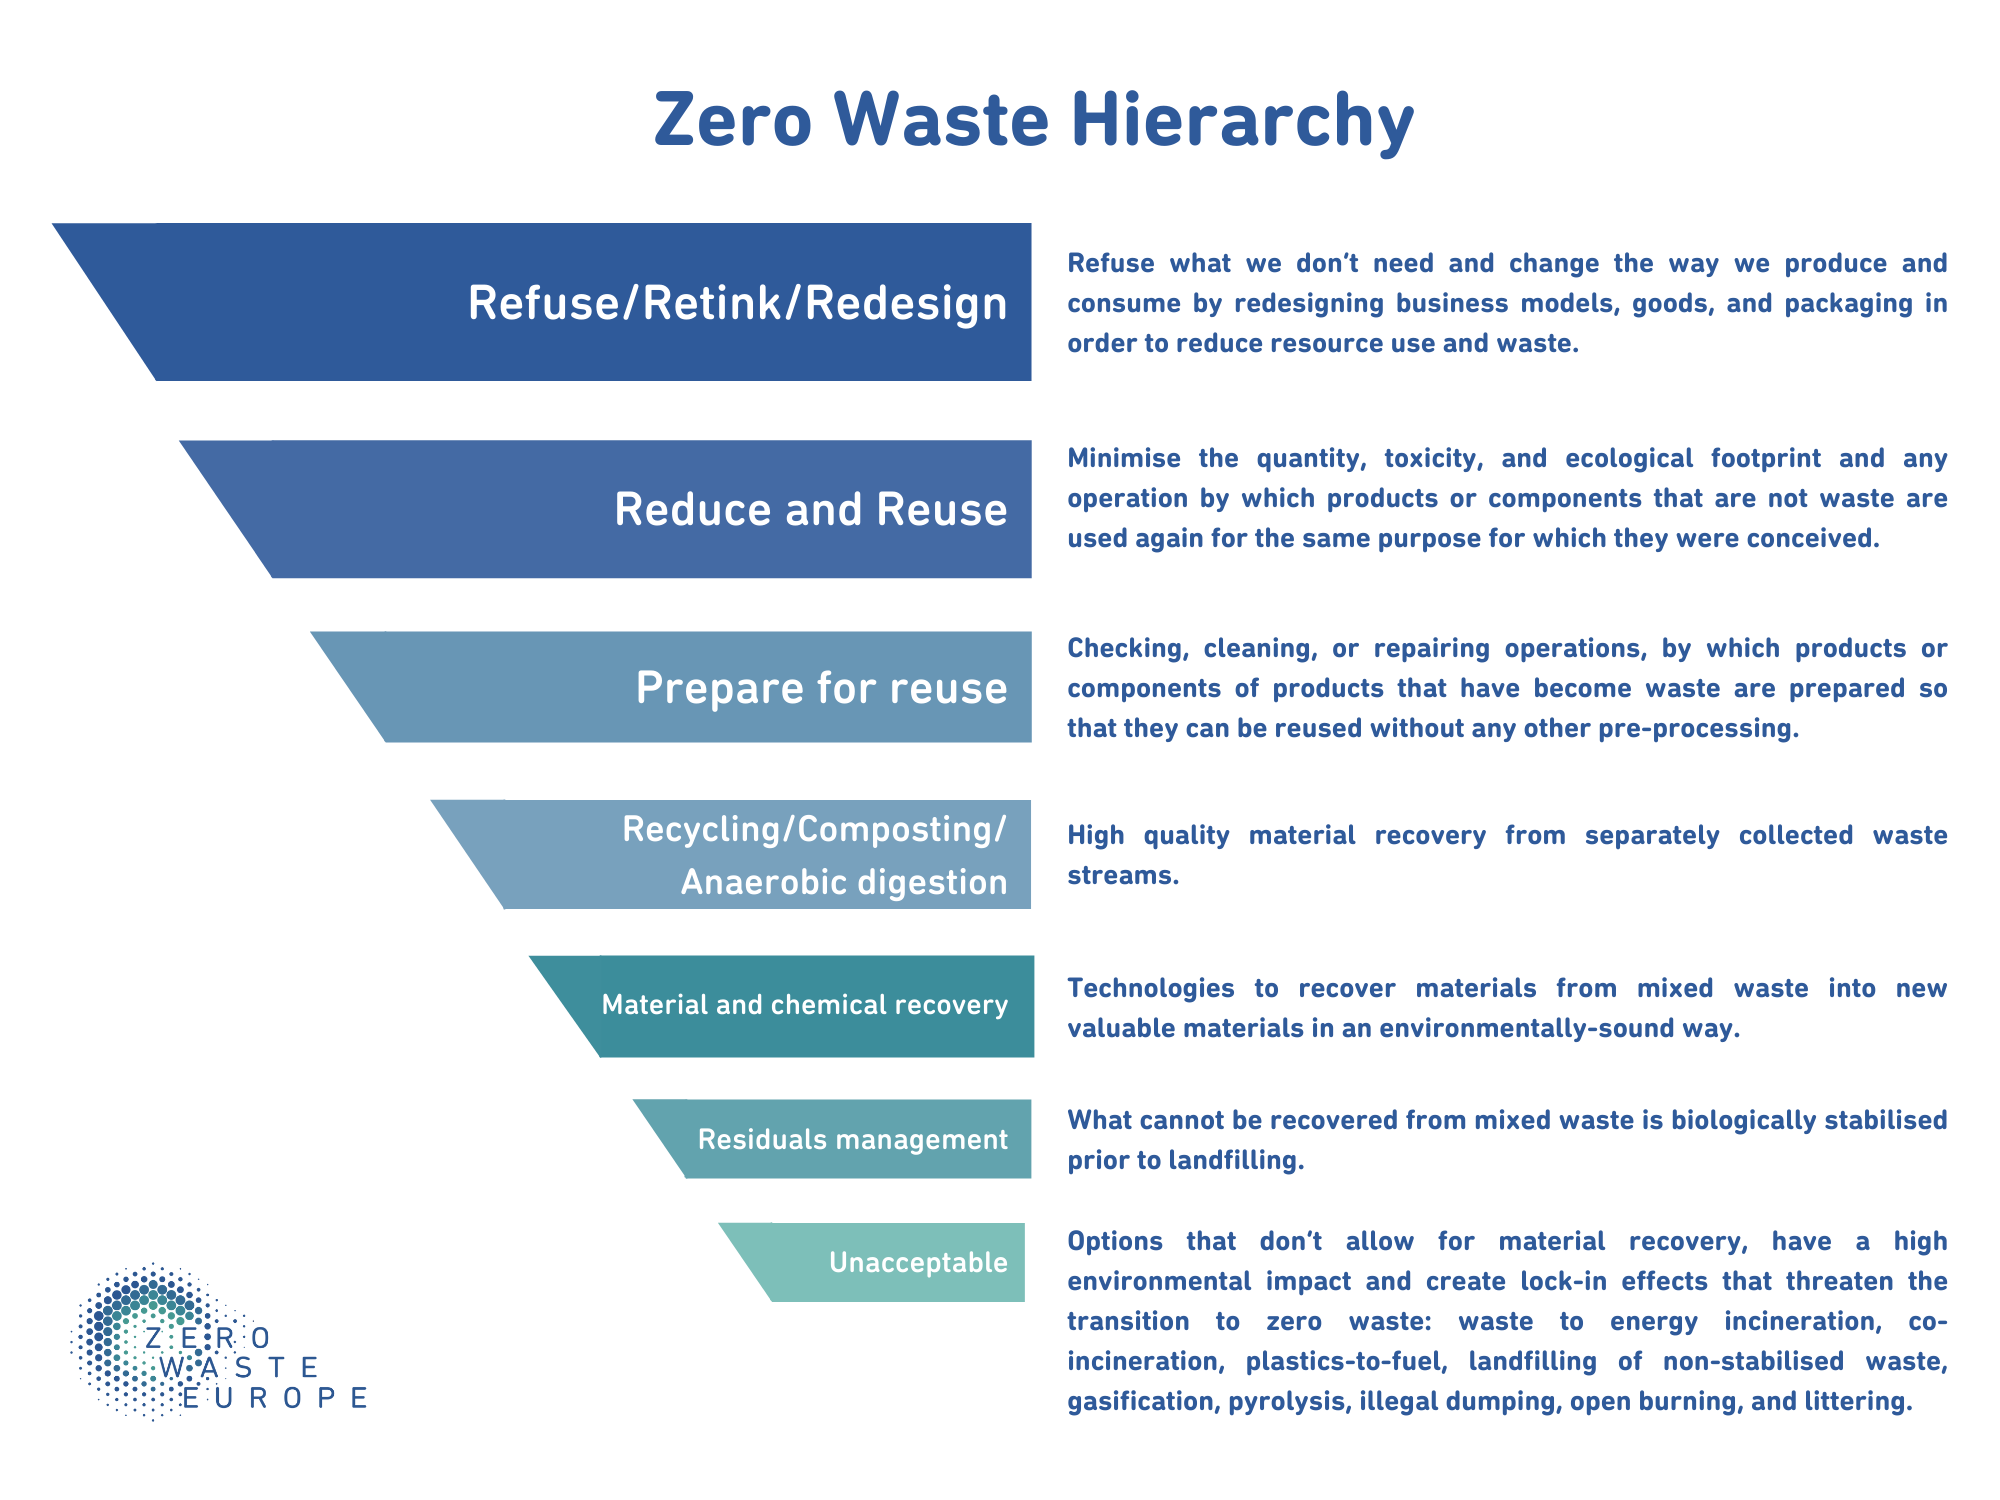 https://zerowasteeurope.eu/wp-content/uploads/2019/05/Zero-Waste-Hierarchy-Design-1.png